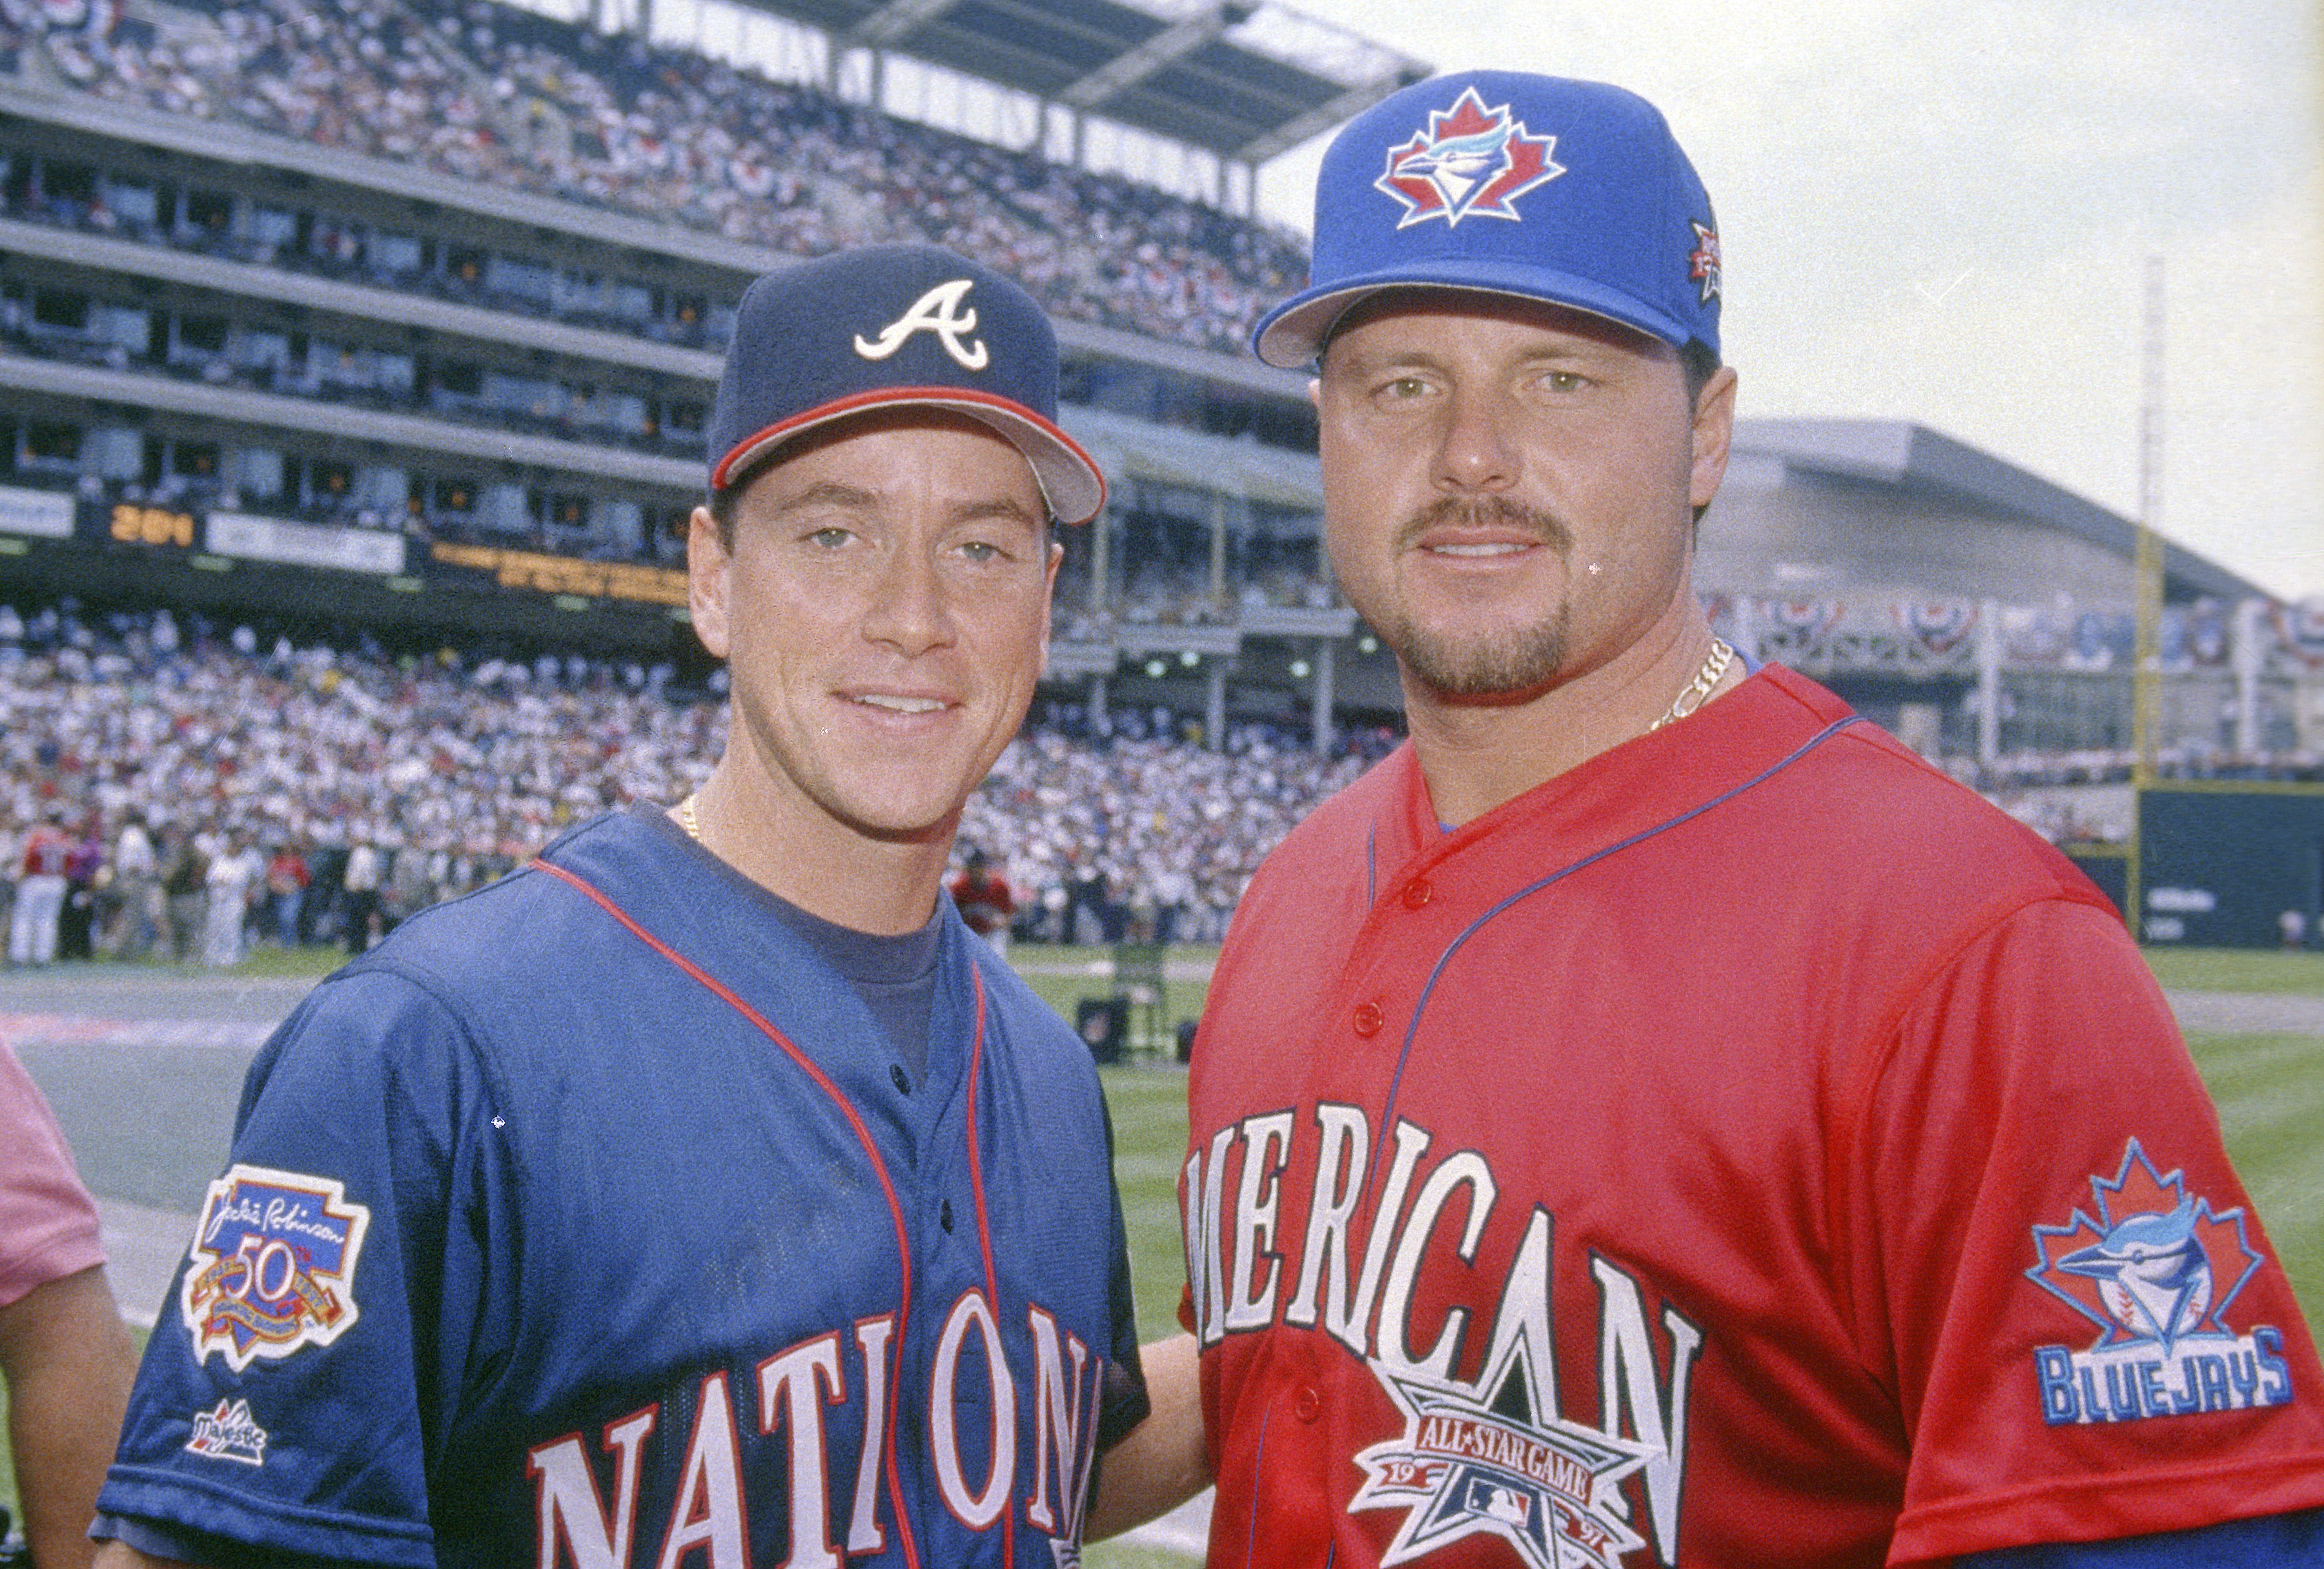 1997 Major League Baseball All-Star Game - National League v American League